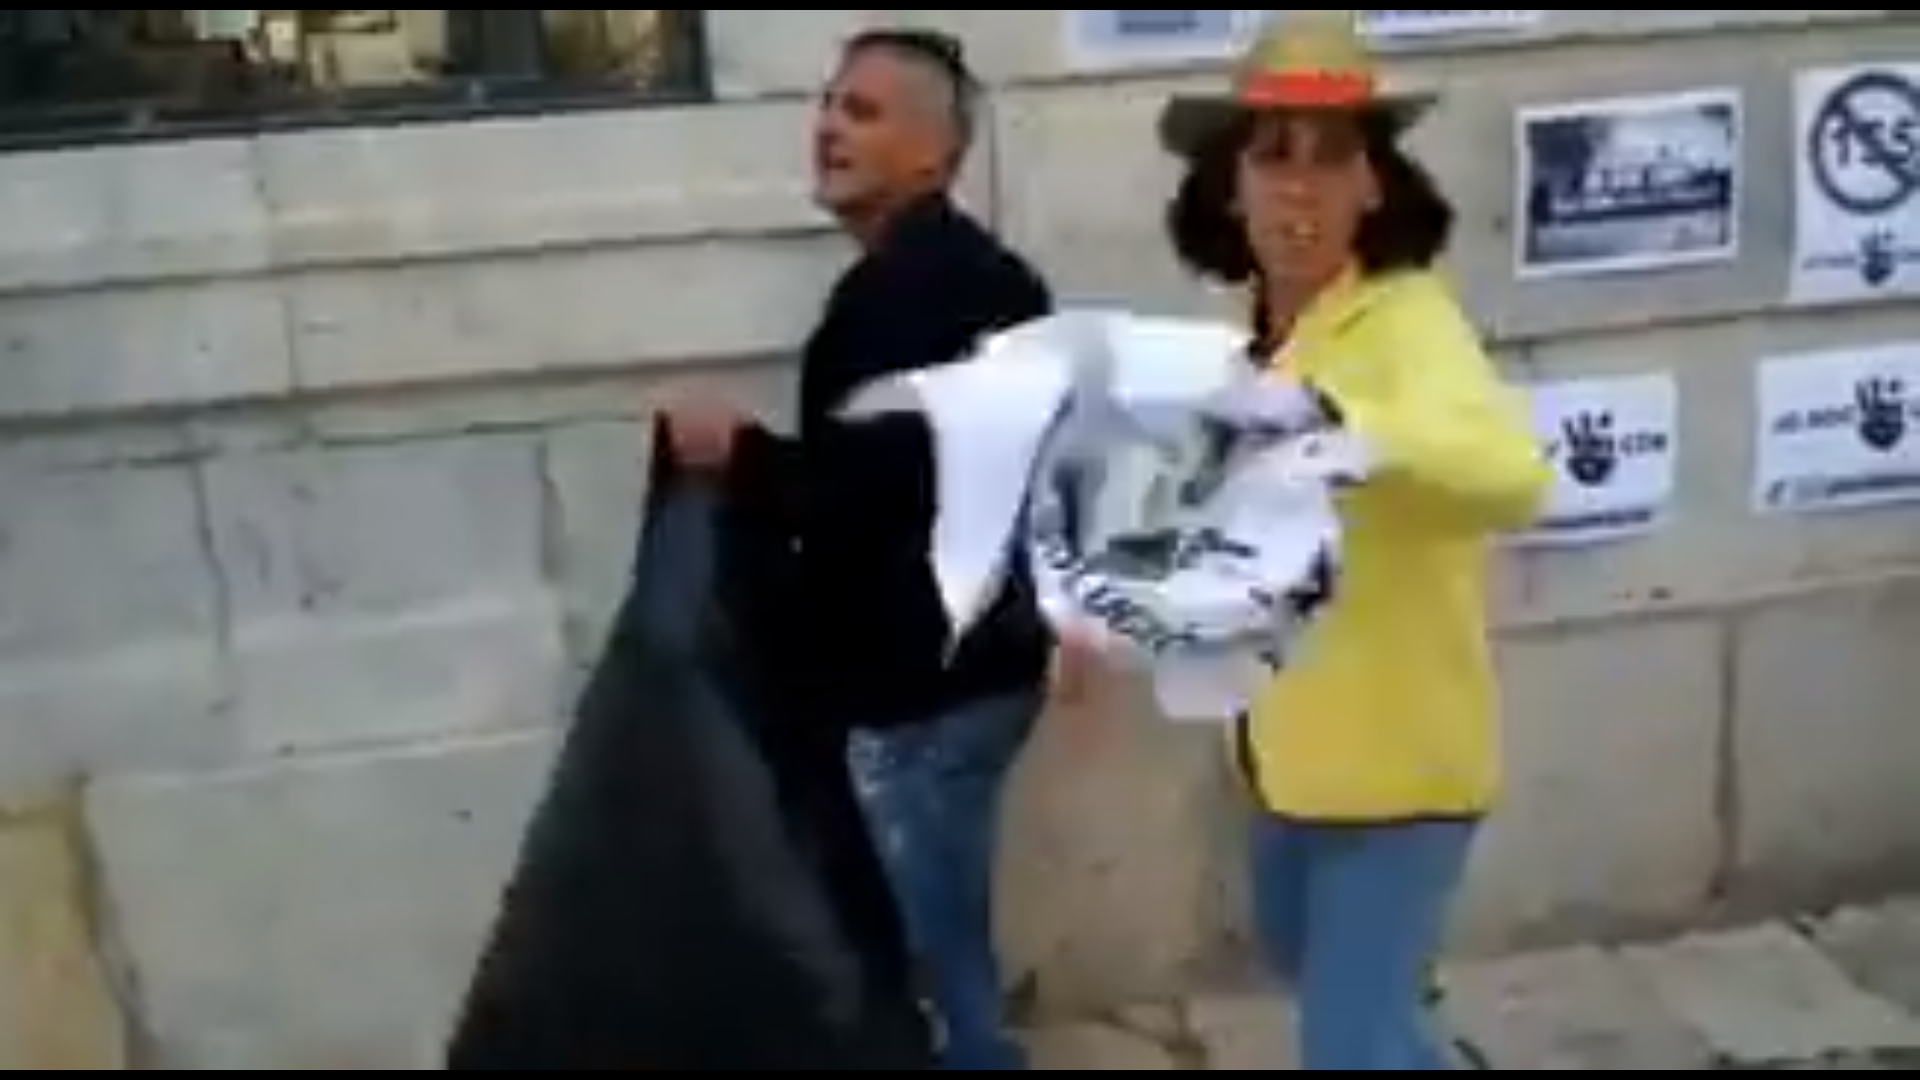 Pillan a una miembro de Cs arrancando carteles de los CDR acompañada de un ultra